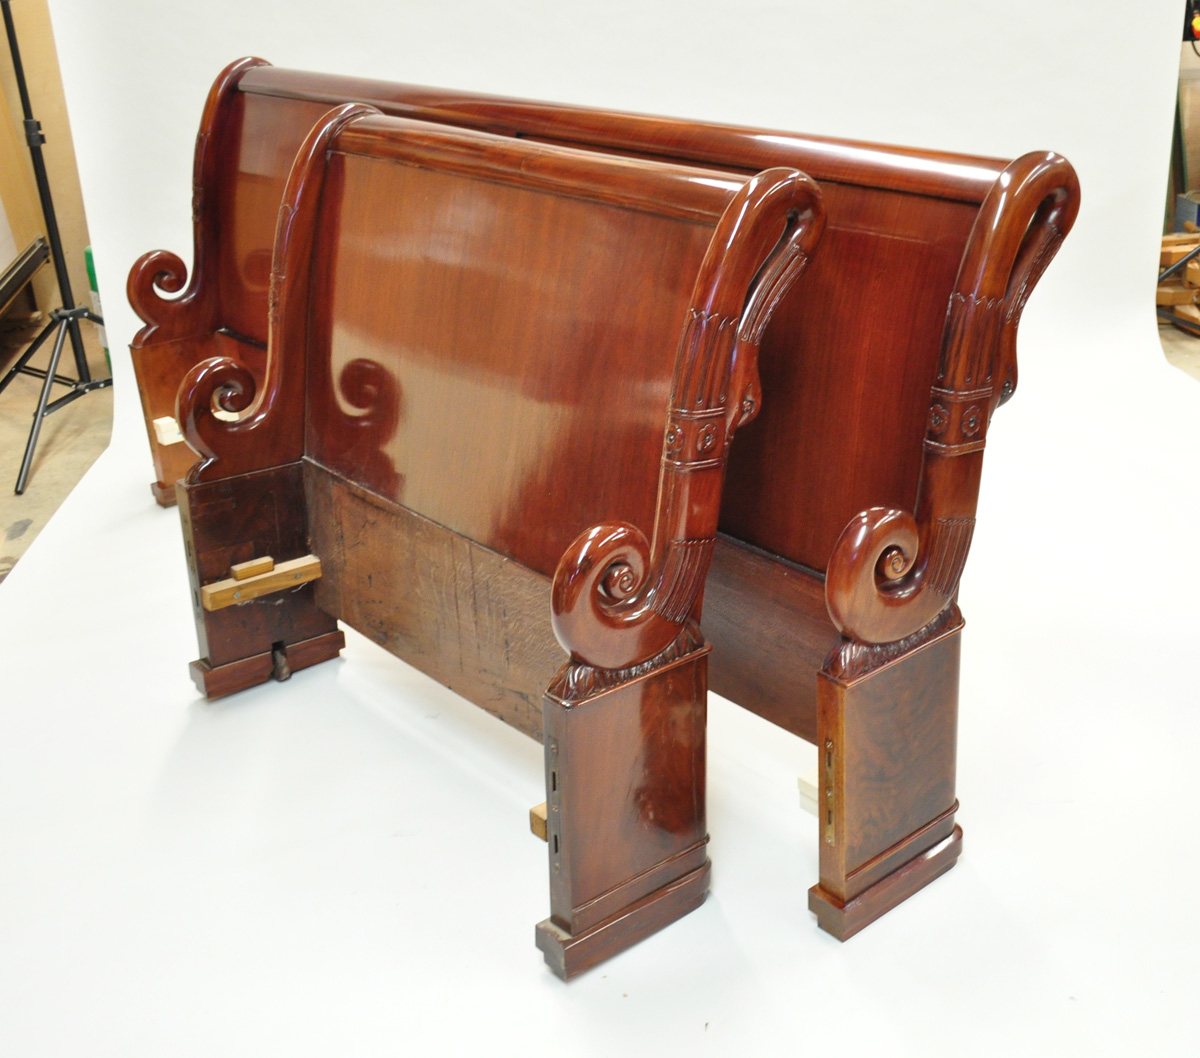 Antique Reproduction Furniture Custom Period Furniture In Ct